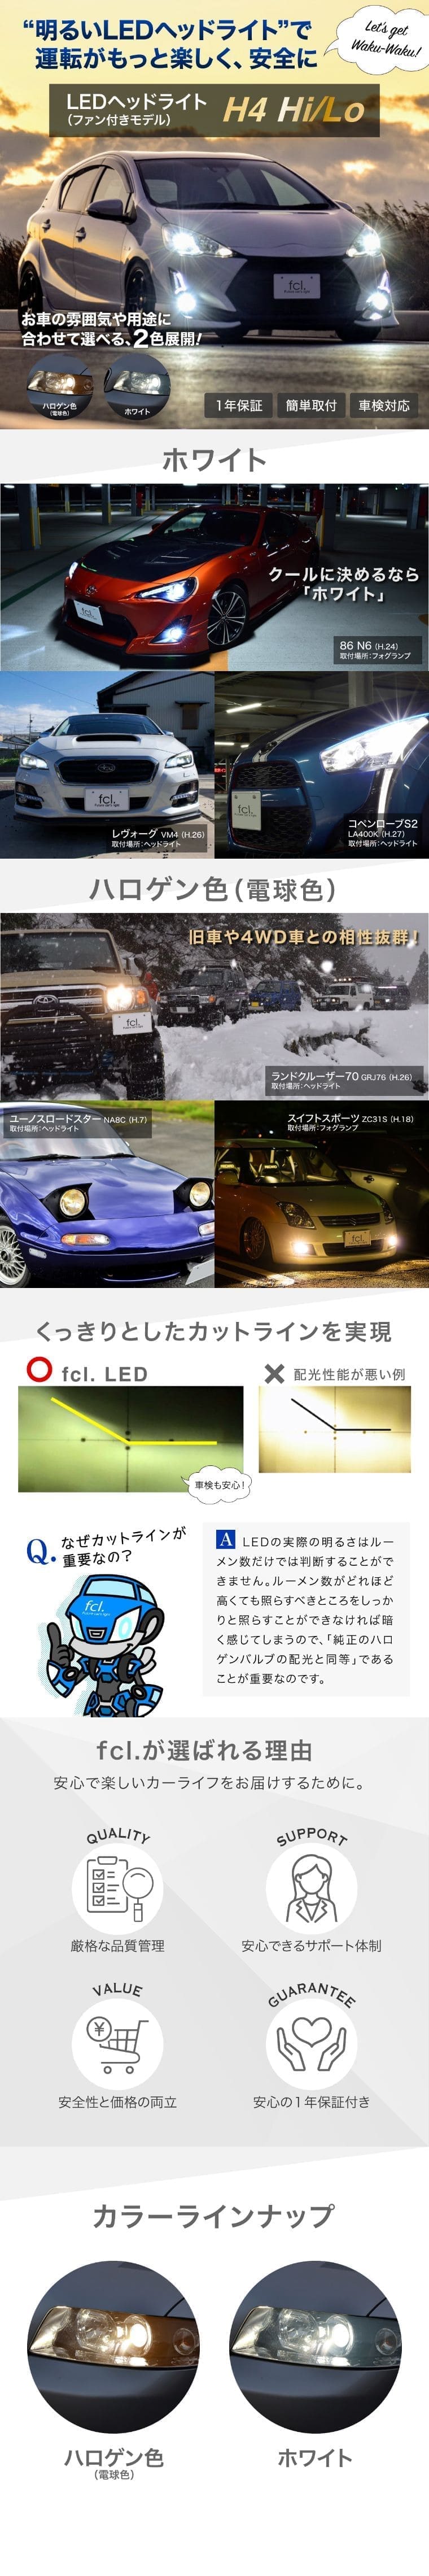 Ledヘッドライト H4 Hi Lo 車検対応 公式通販 Fcl 車のled専門店